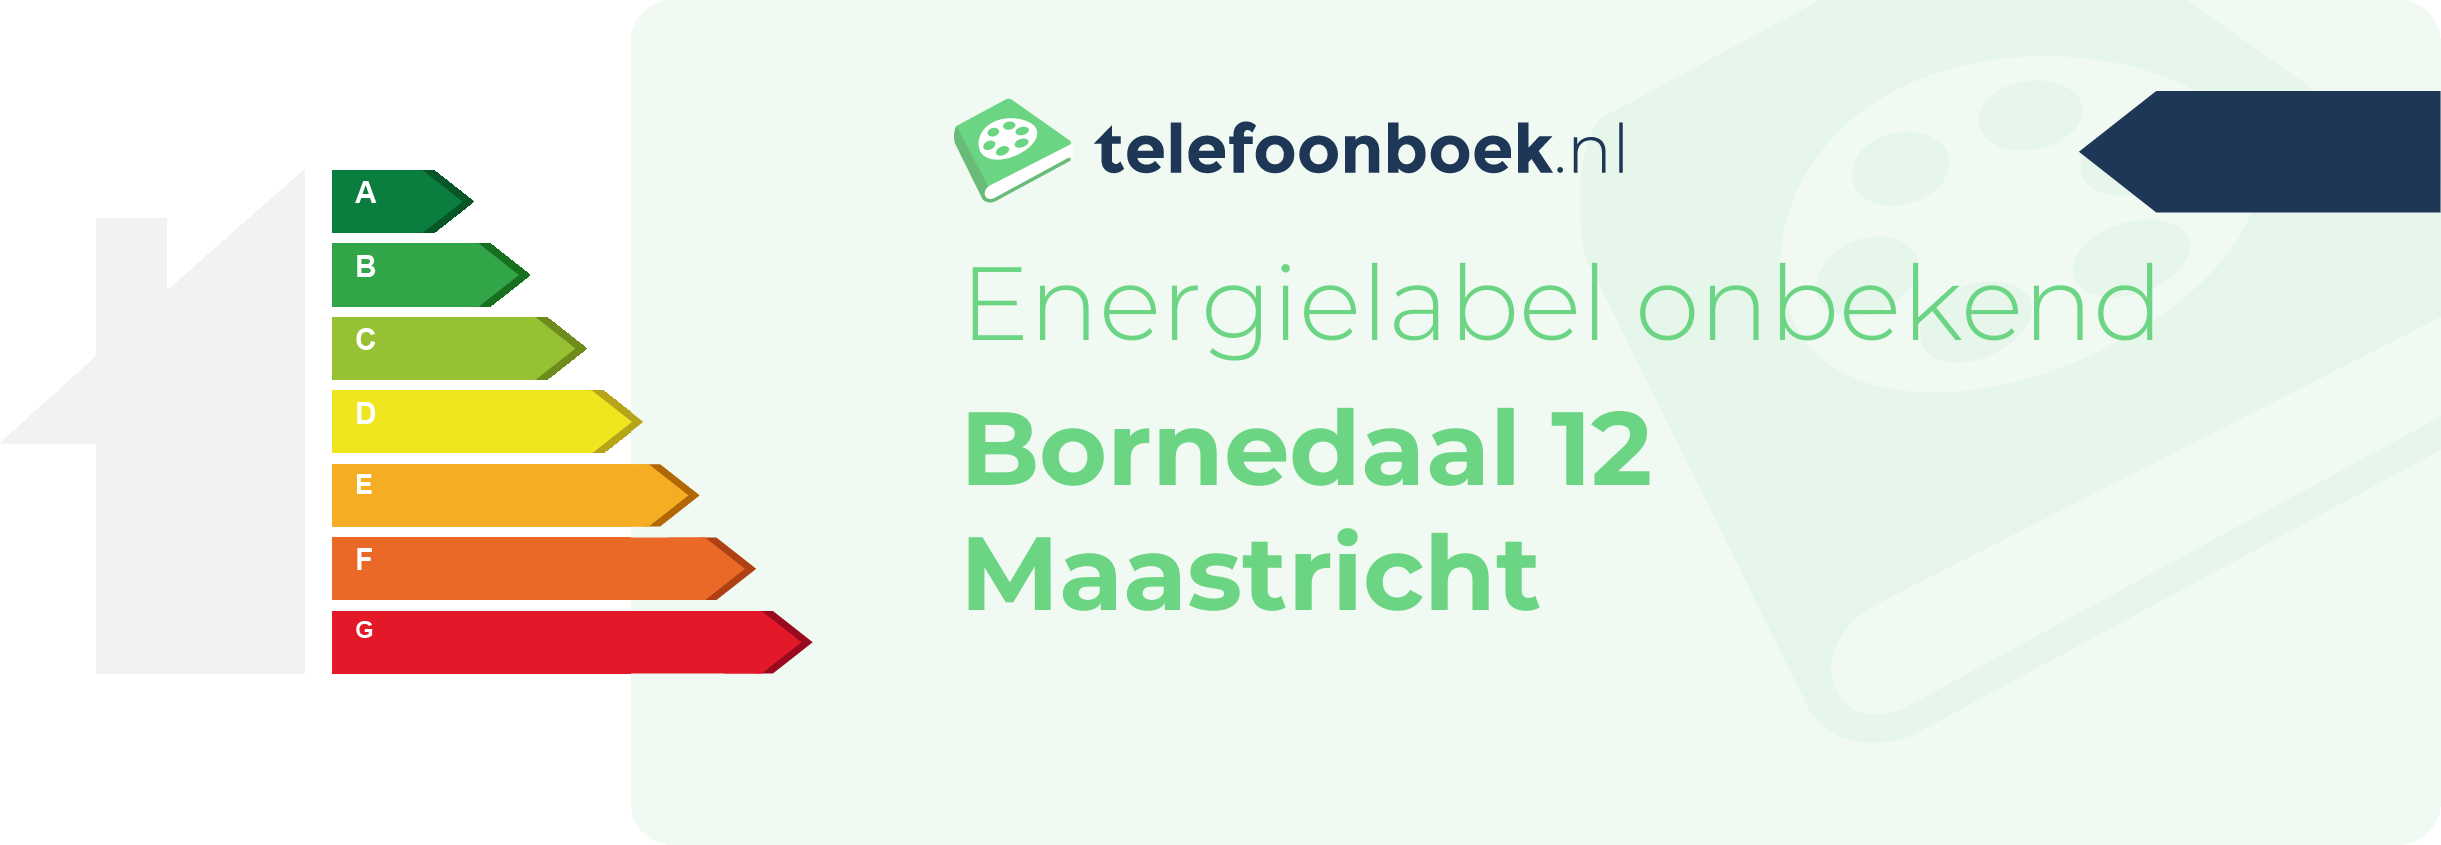 Energielabel Bornedaal 12 Maastricht